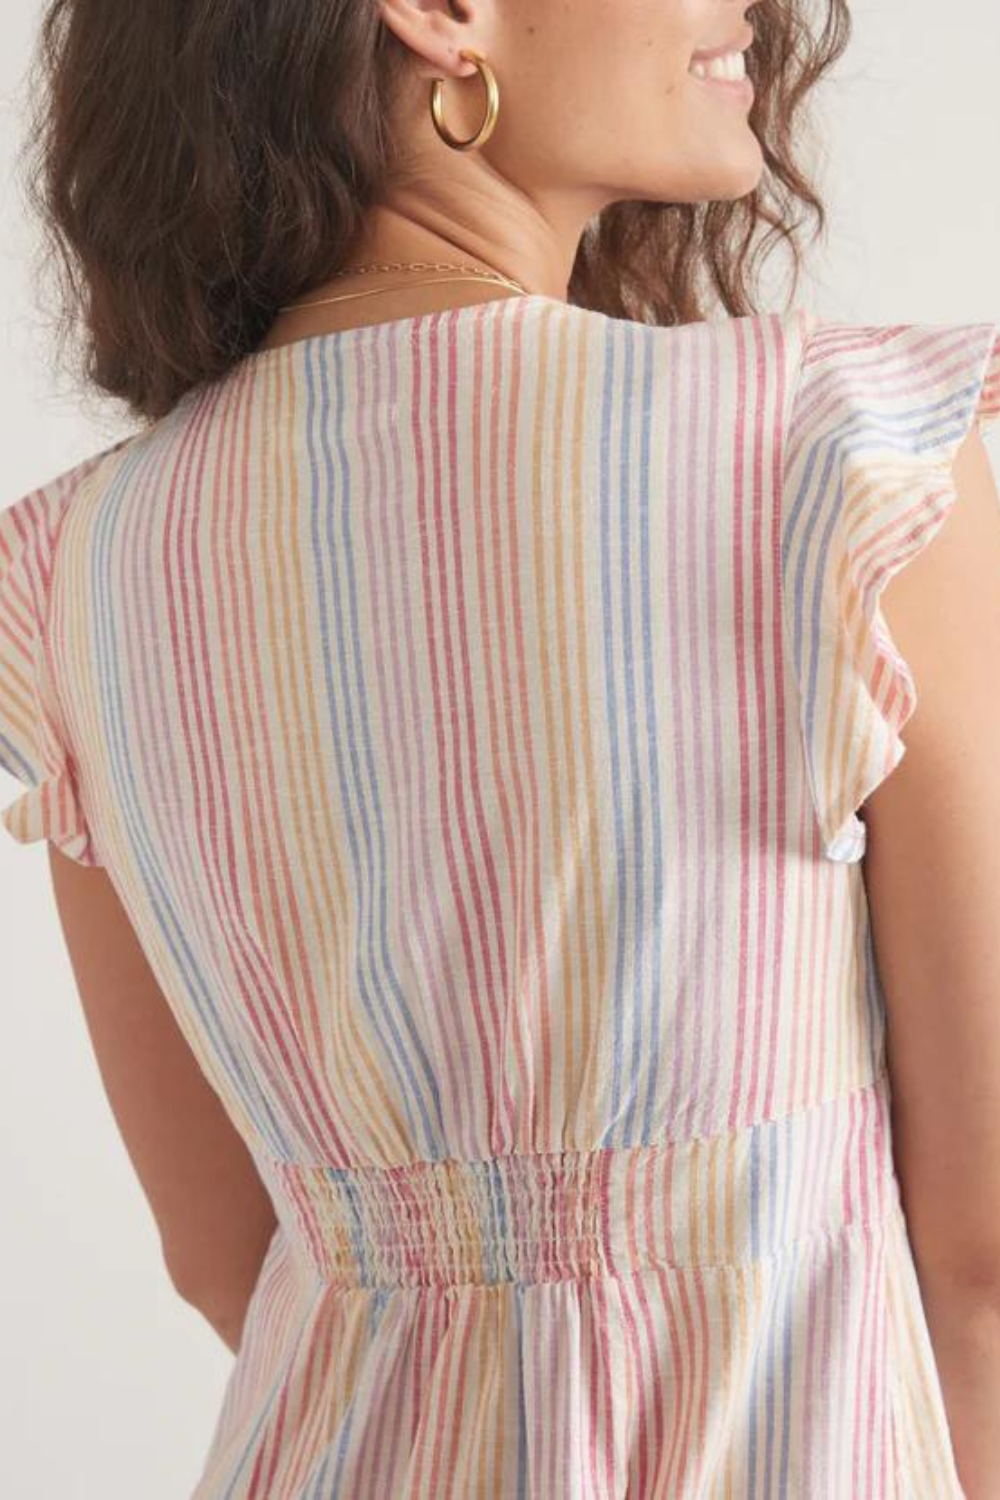 Marine Layer Camila Midi Dress - Warm Rainbow Stripe